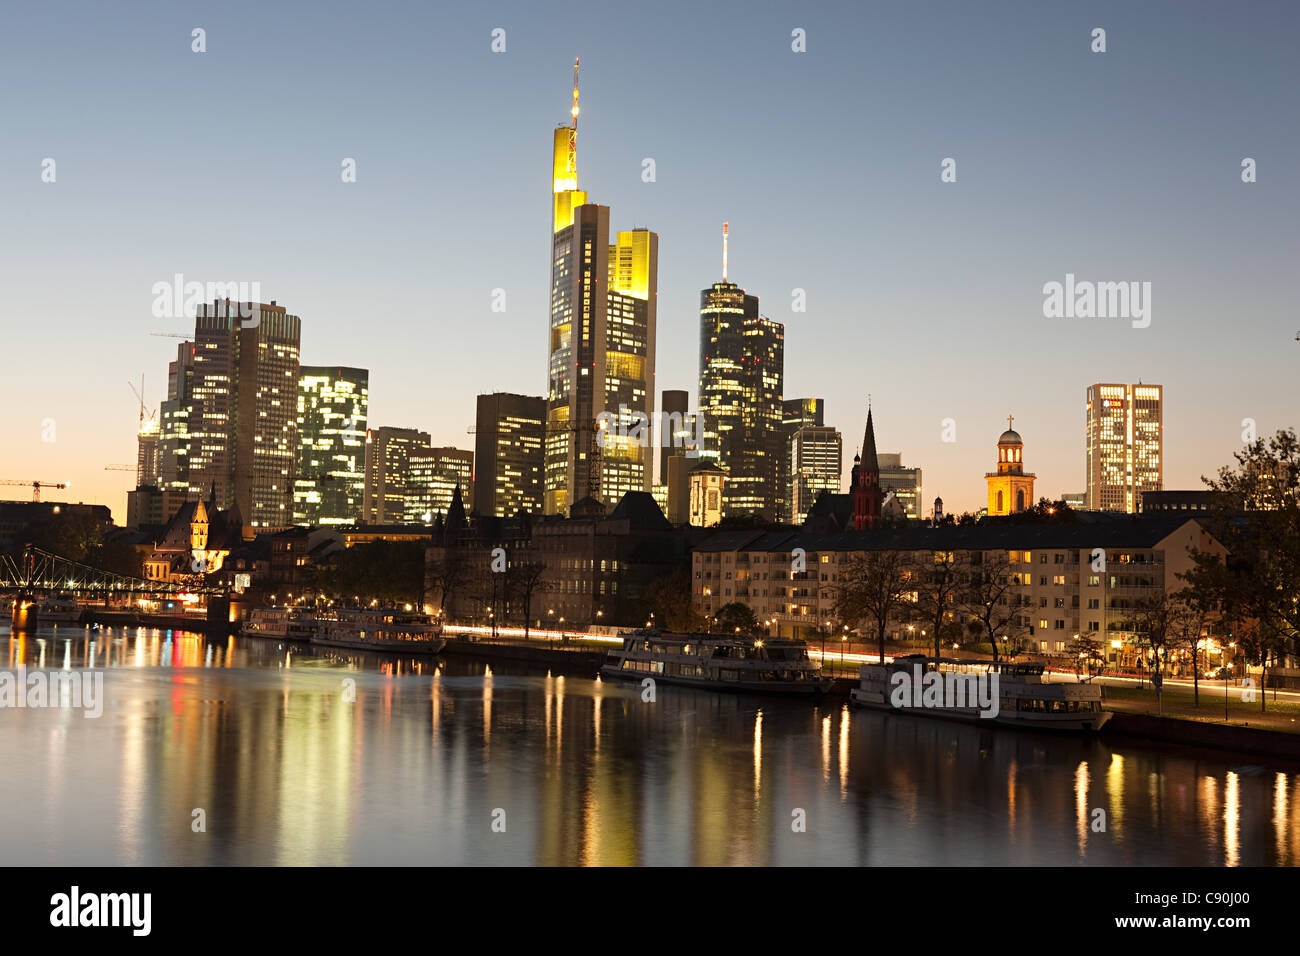 Skyline and Main River at night, Frankfurt, Germnay Stock Photo